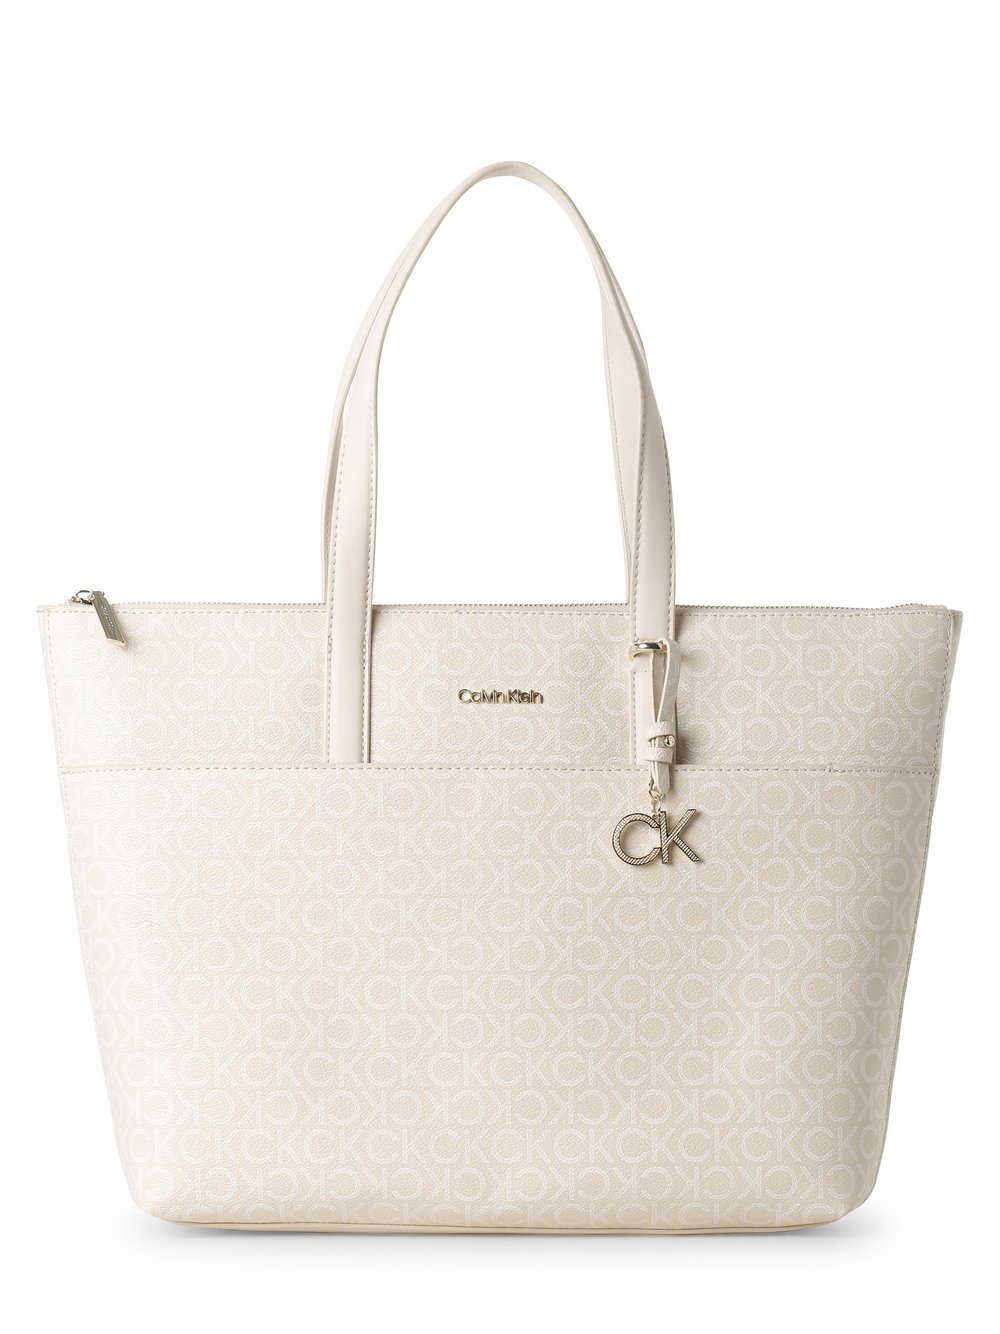 Calvin Klein - Damska torba shopper, biały|beżowy